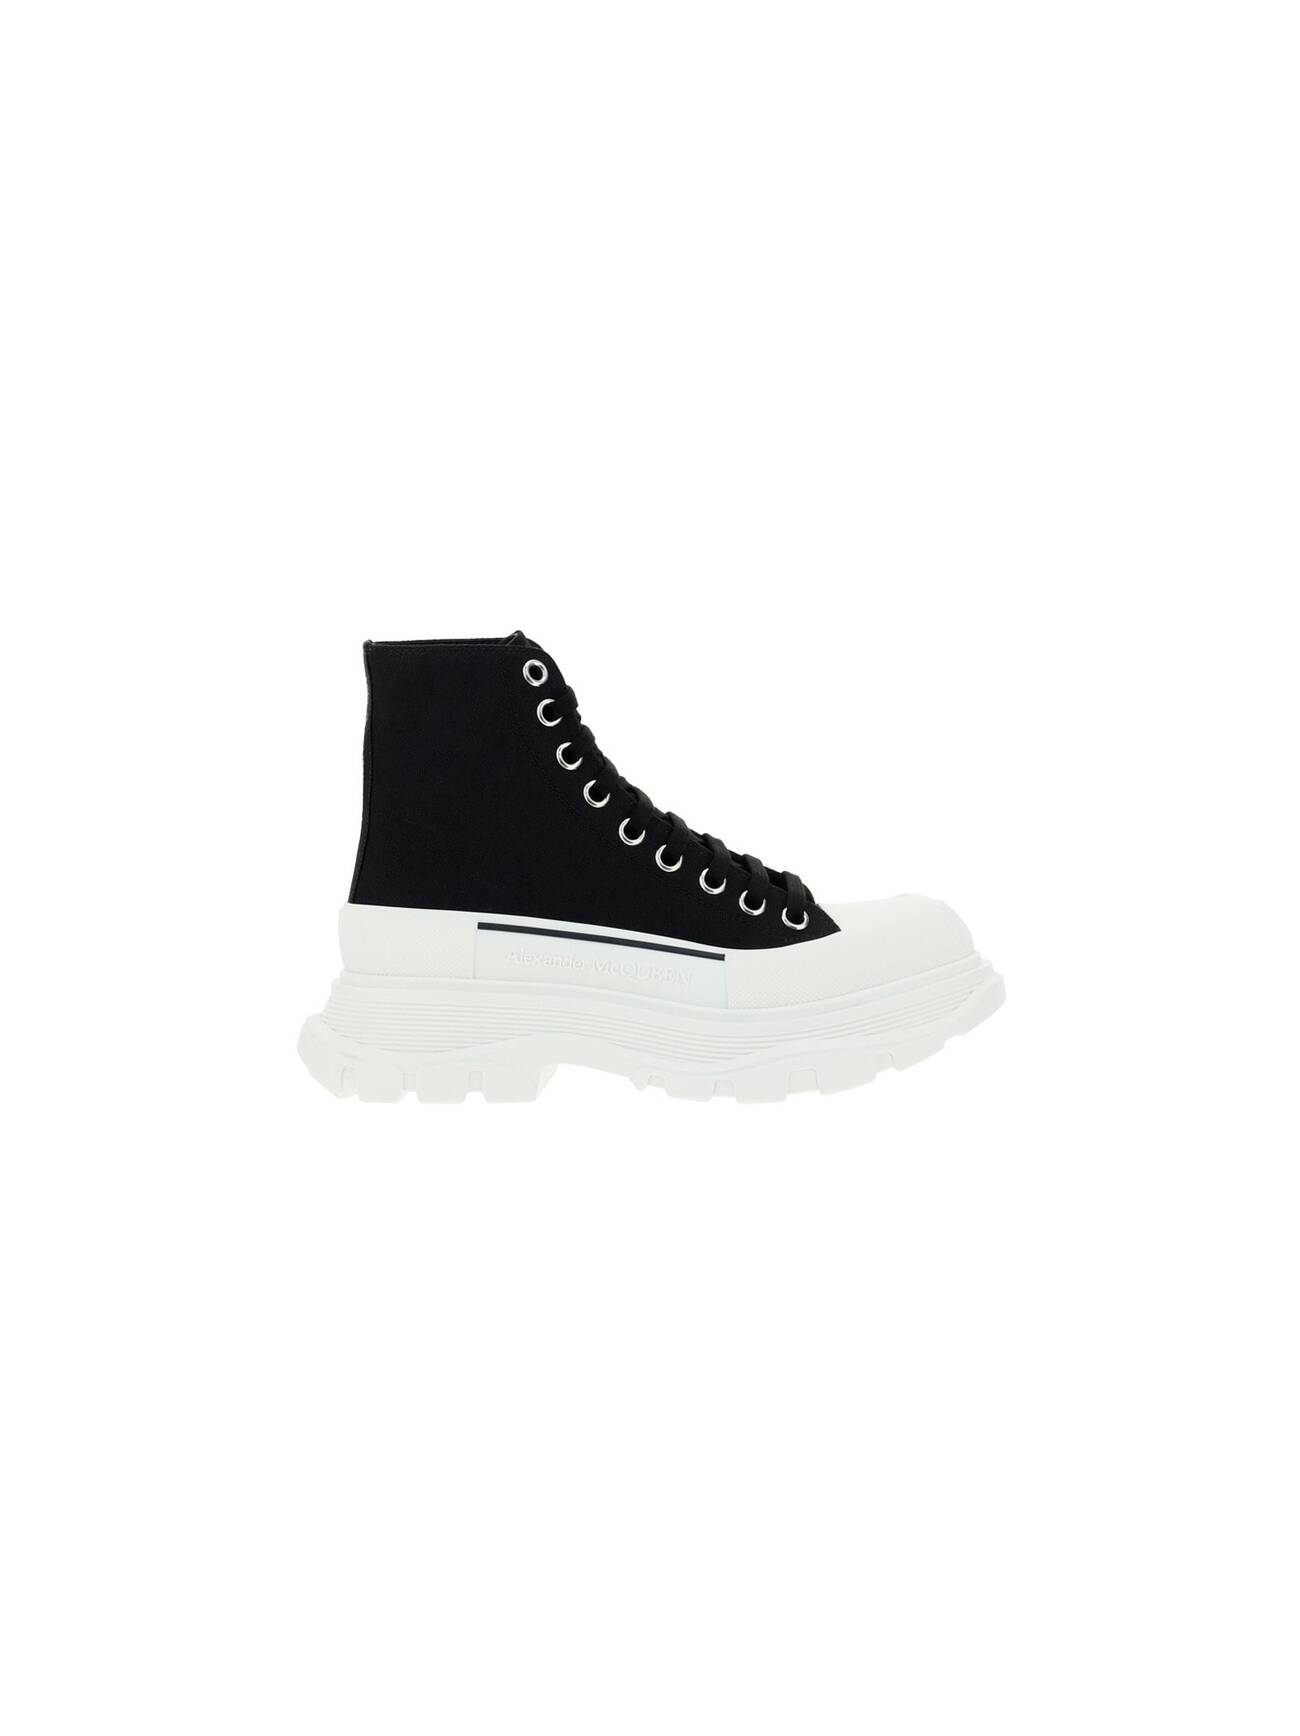 Alexander Mcqueen Sneakers in black / white